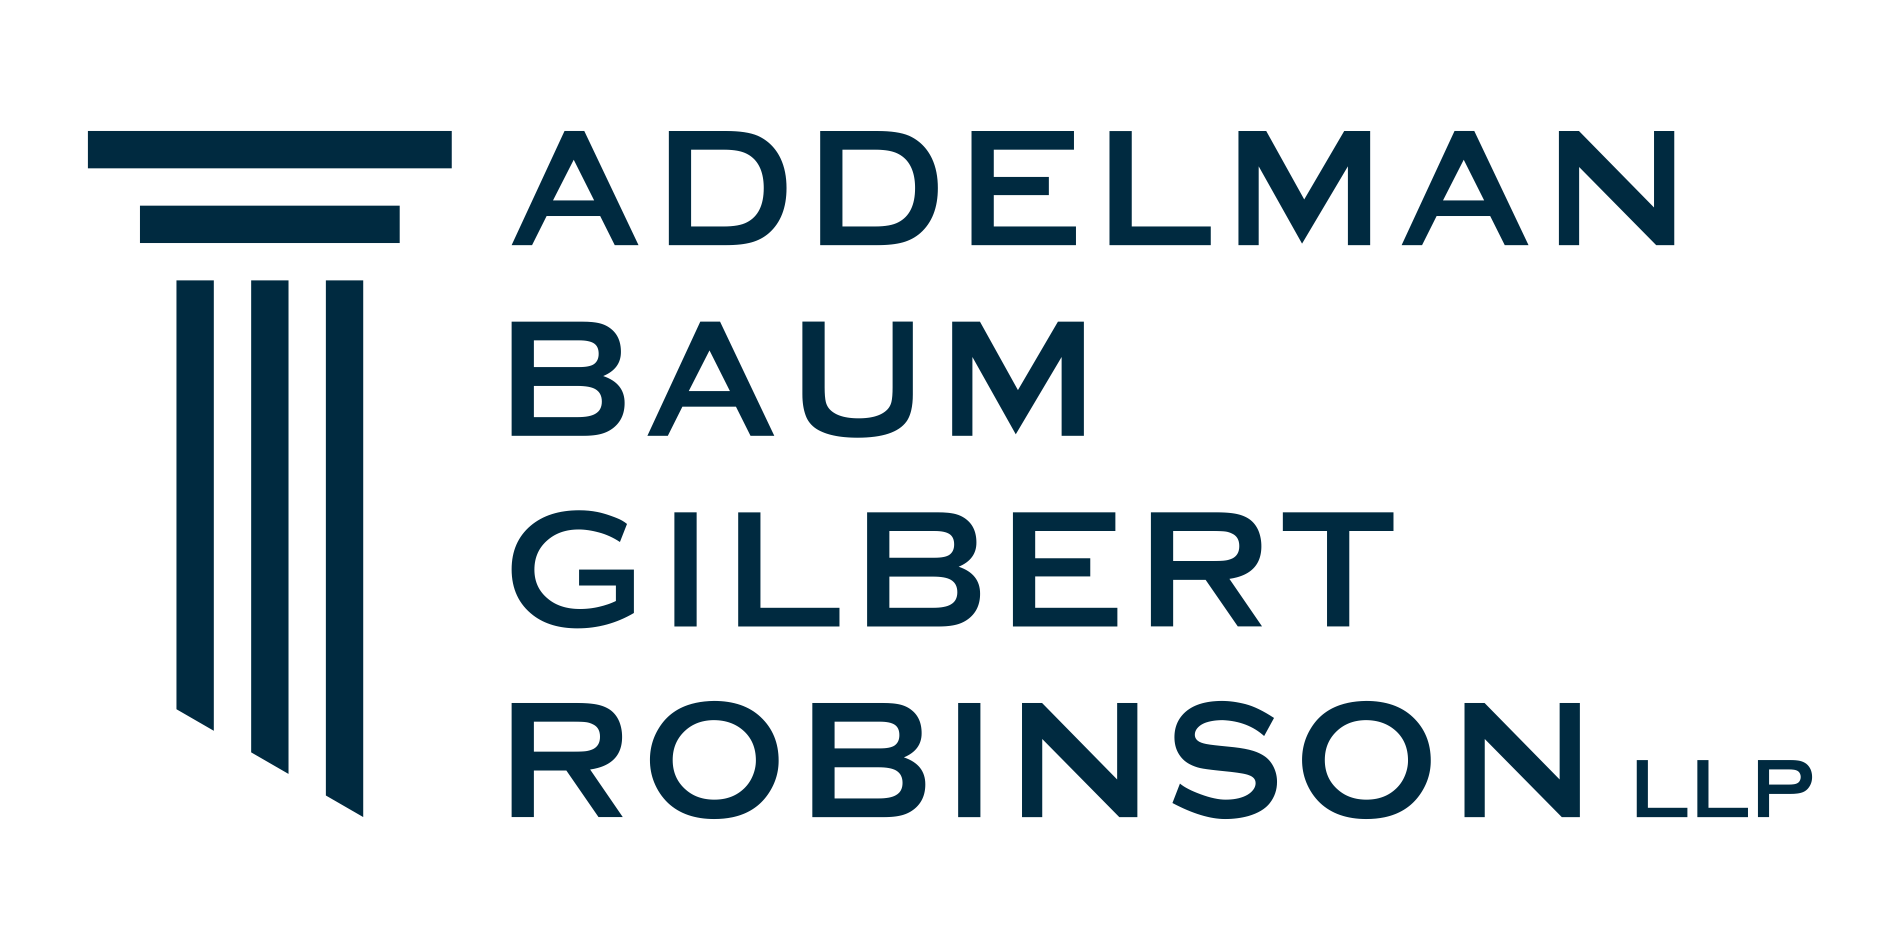 Addelman Baum Gilbert Robinson LLP